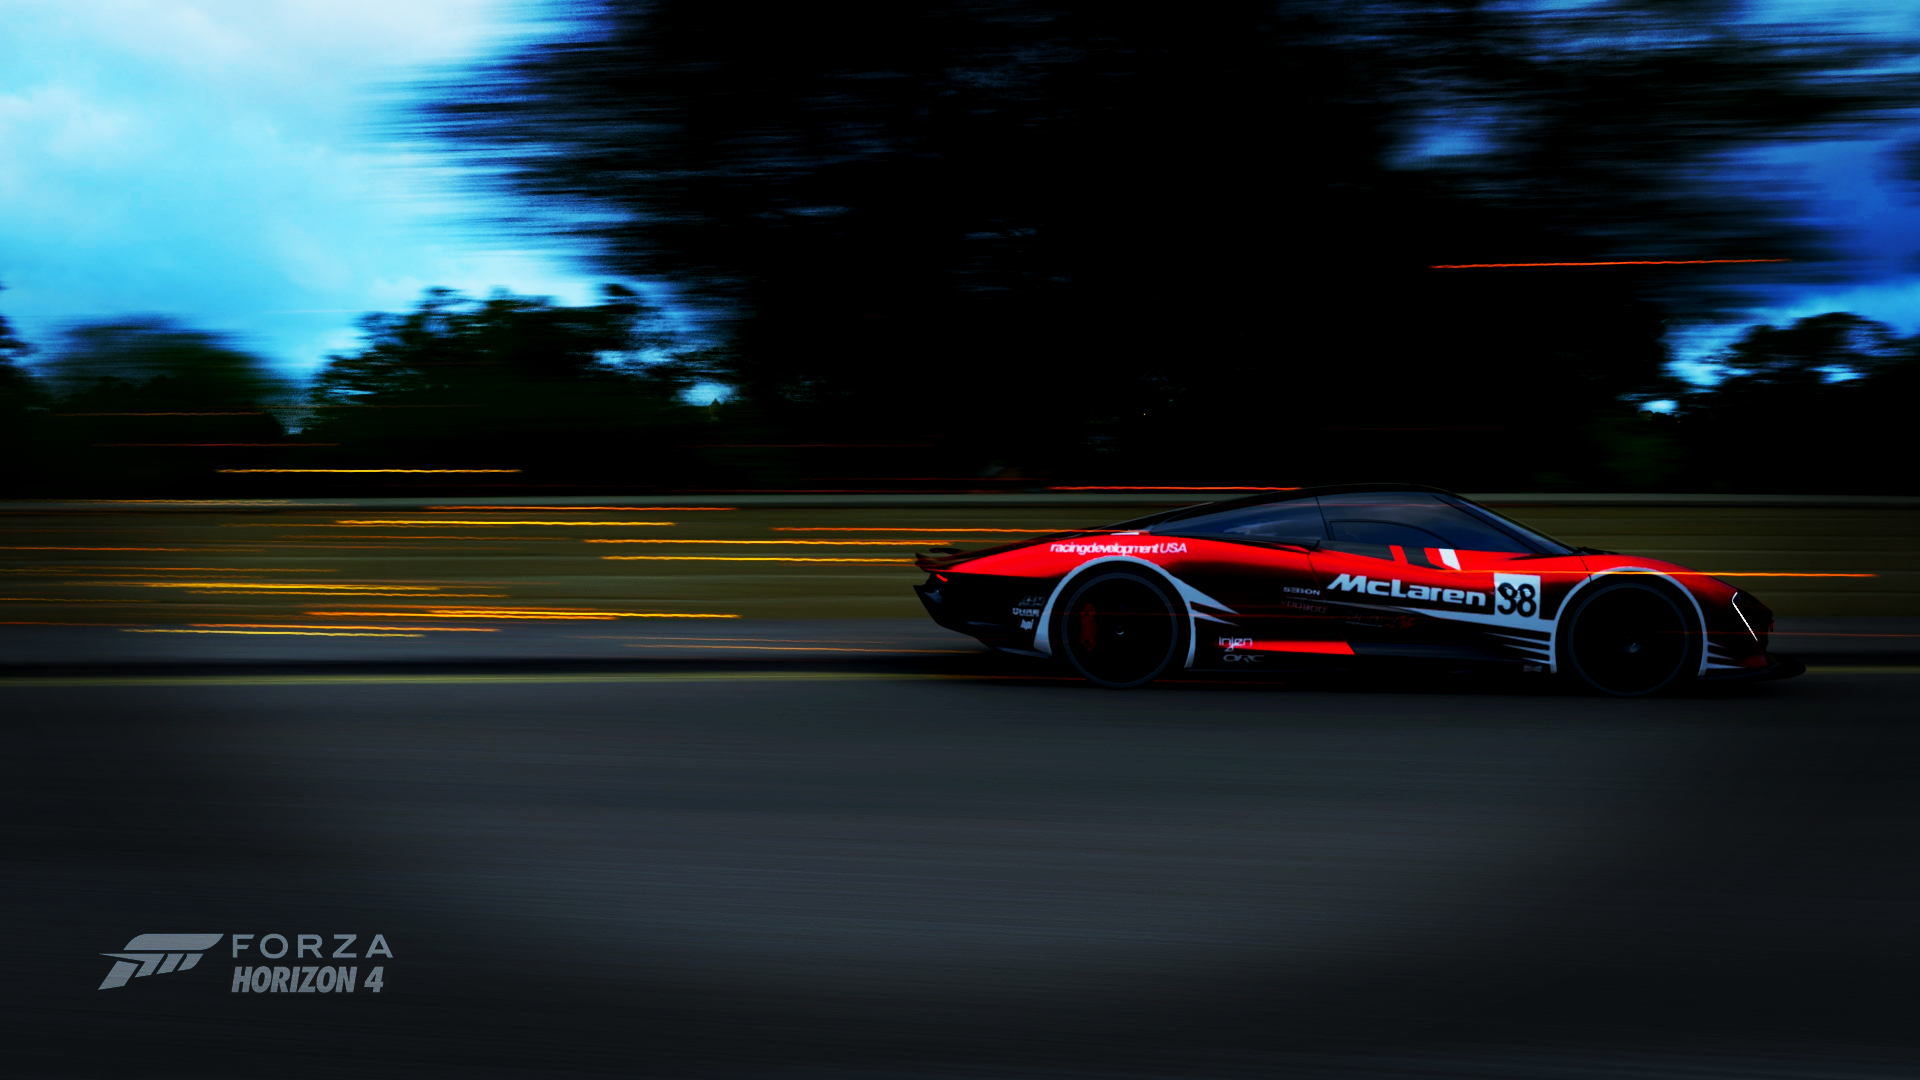 General 1920x1080 Forza Horizon McLaren Speedtail AMG ONE video games side view logo car night blurred